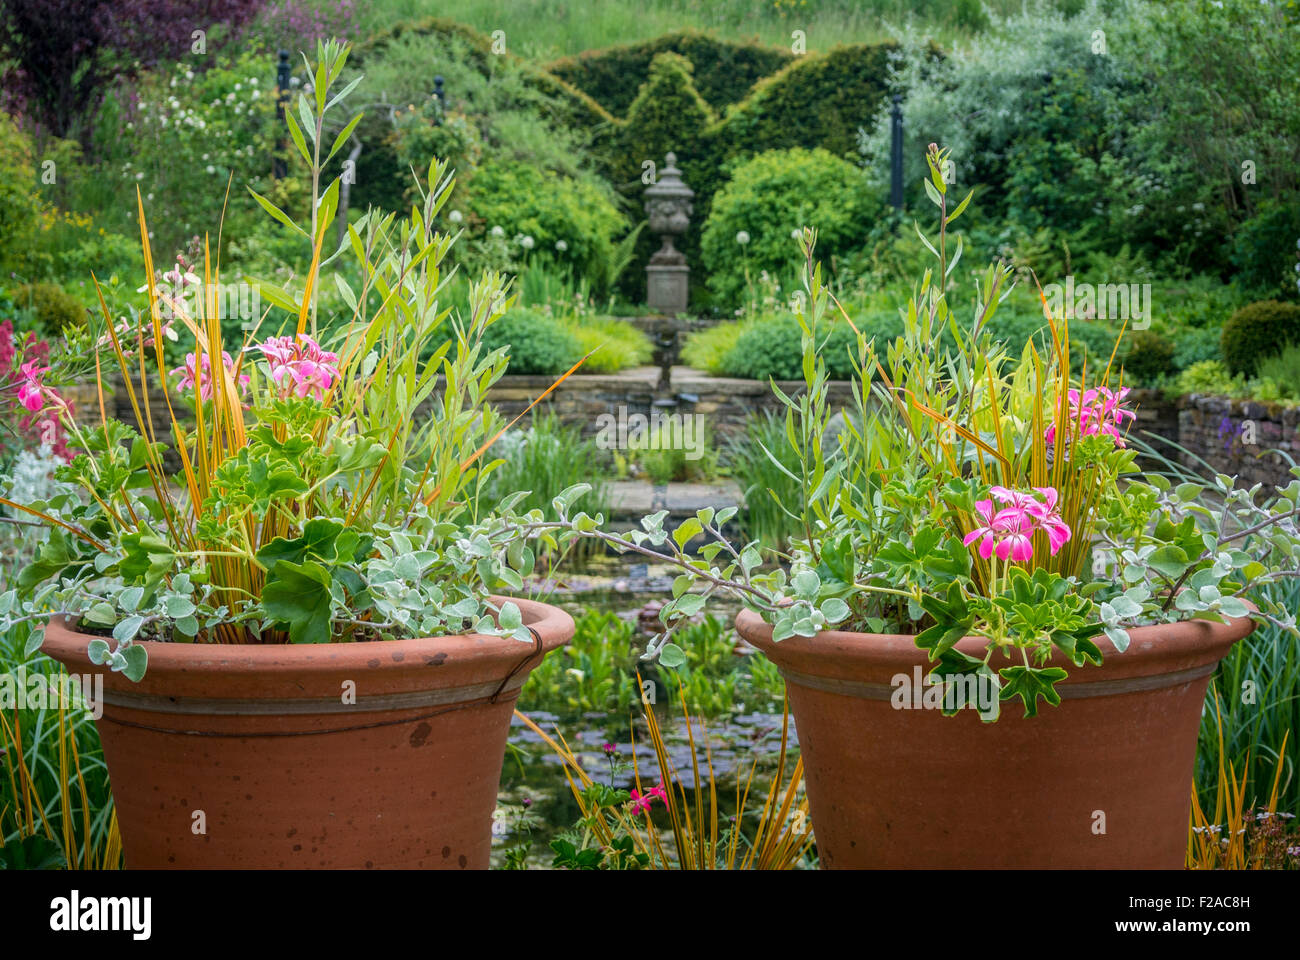 Terracotta plant pots with flowering plants in garden Stock Photo